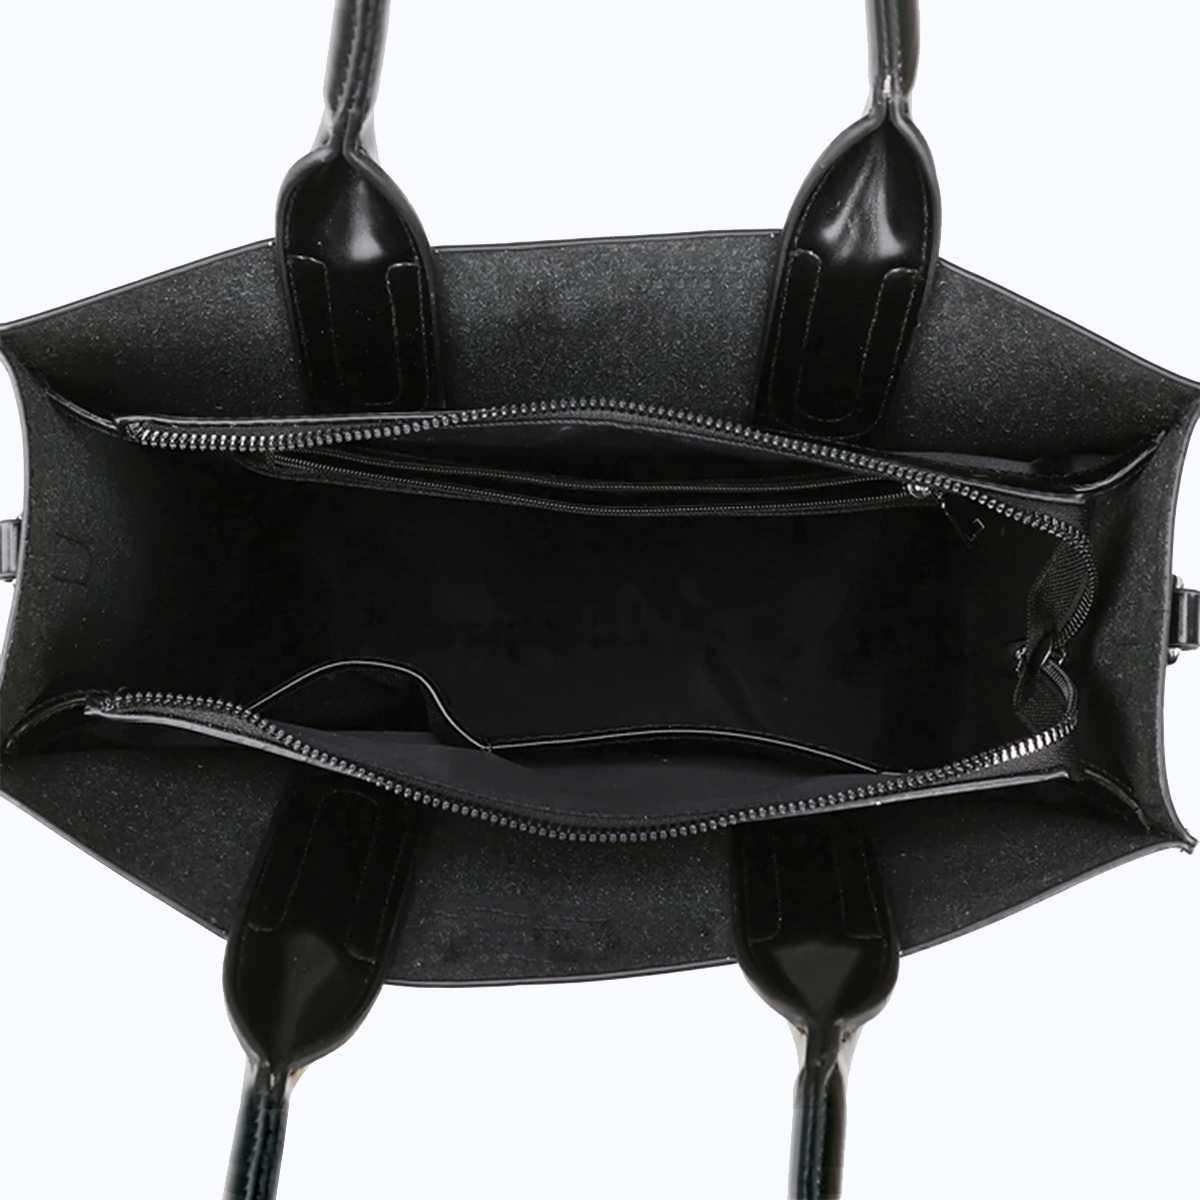 Reduce Stress At Work With Pug - Luxury Handbag V1